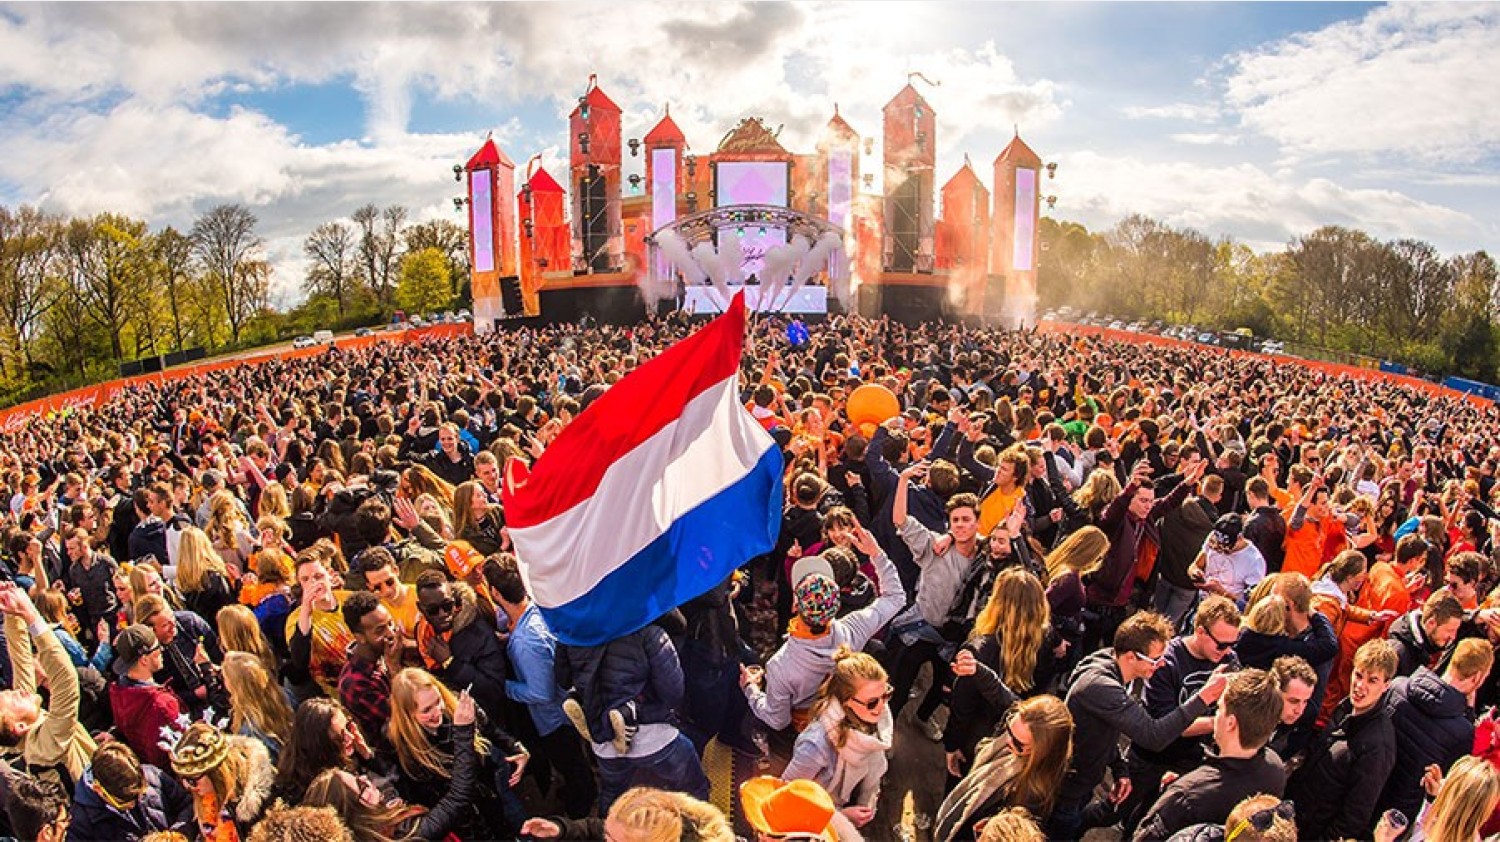 Party nieuws: Koningsdag festival Kingsland verplaatst naar 2022